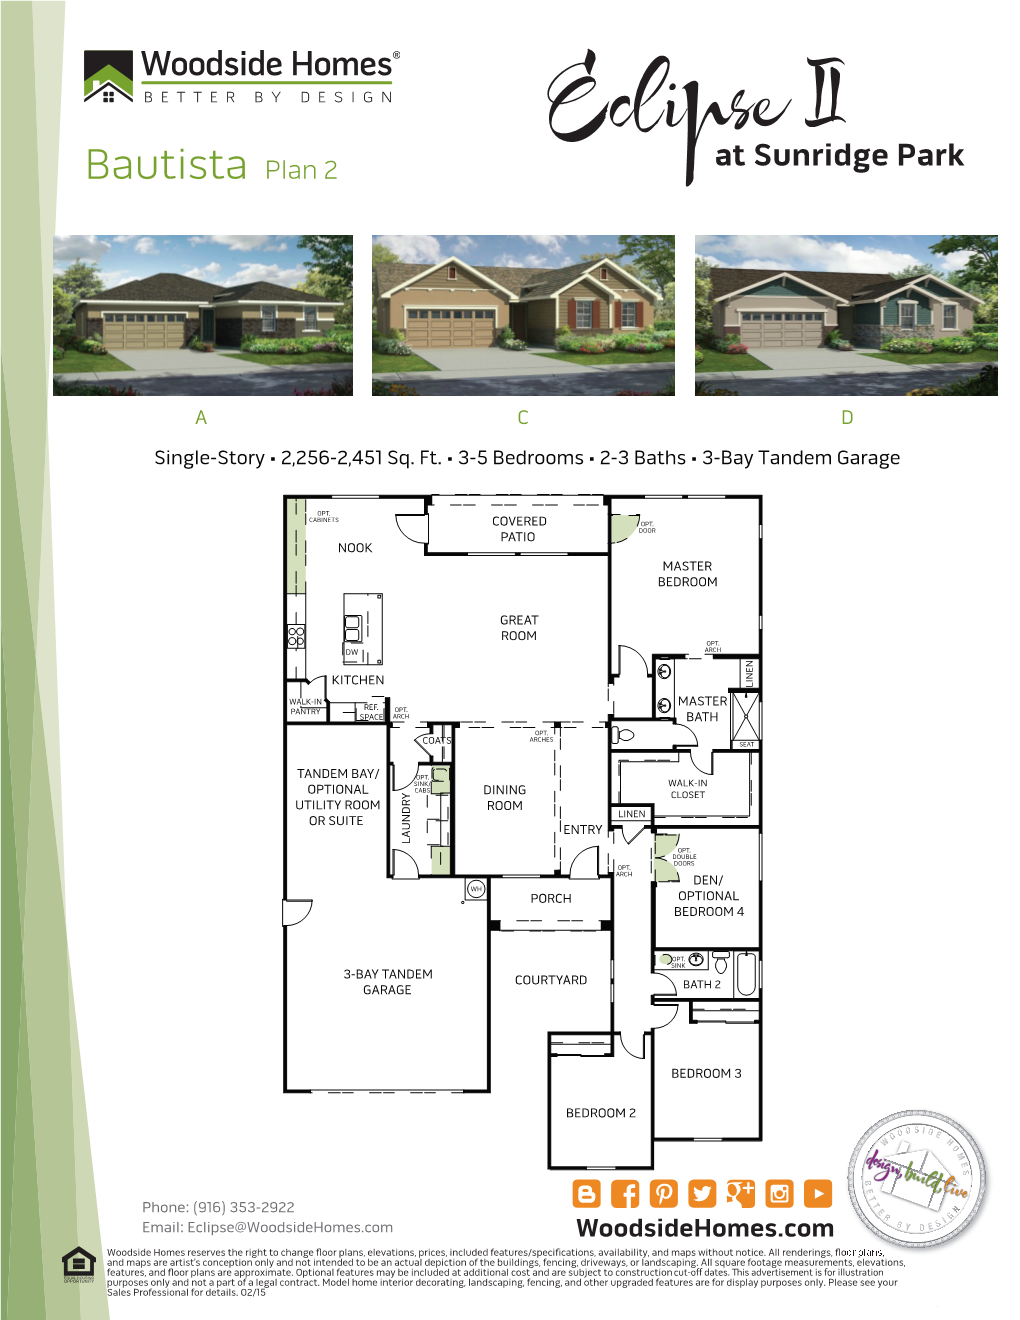 Bautista Plan 2 at Sunridge Park